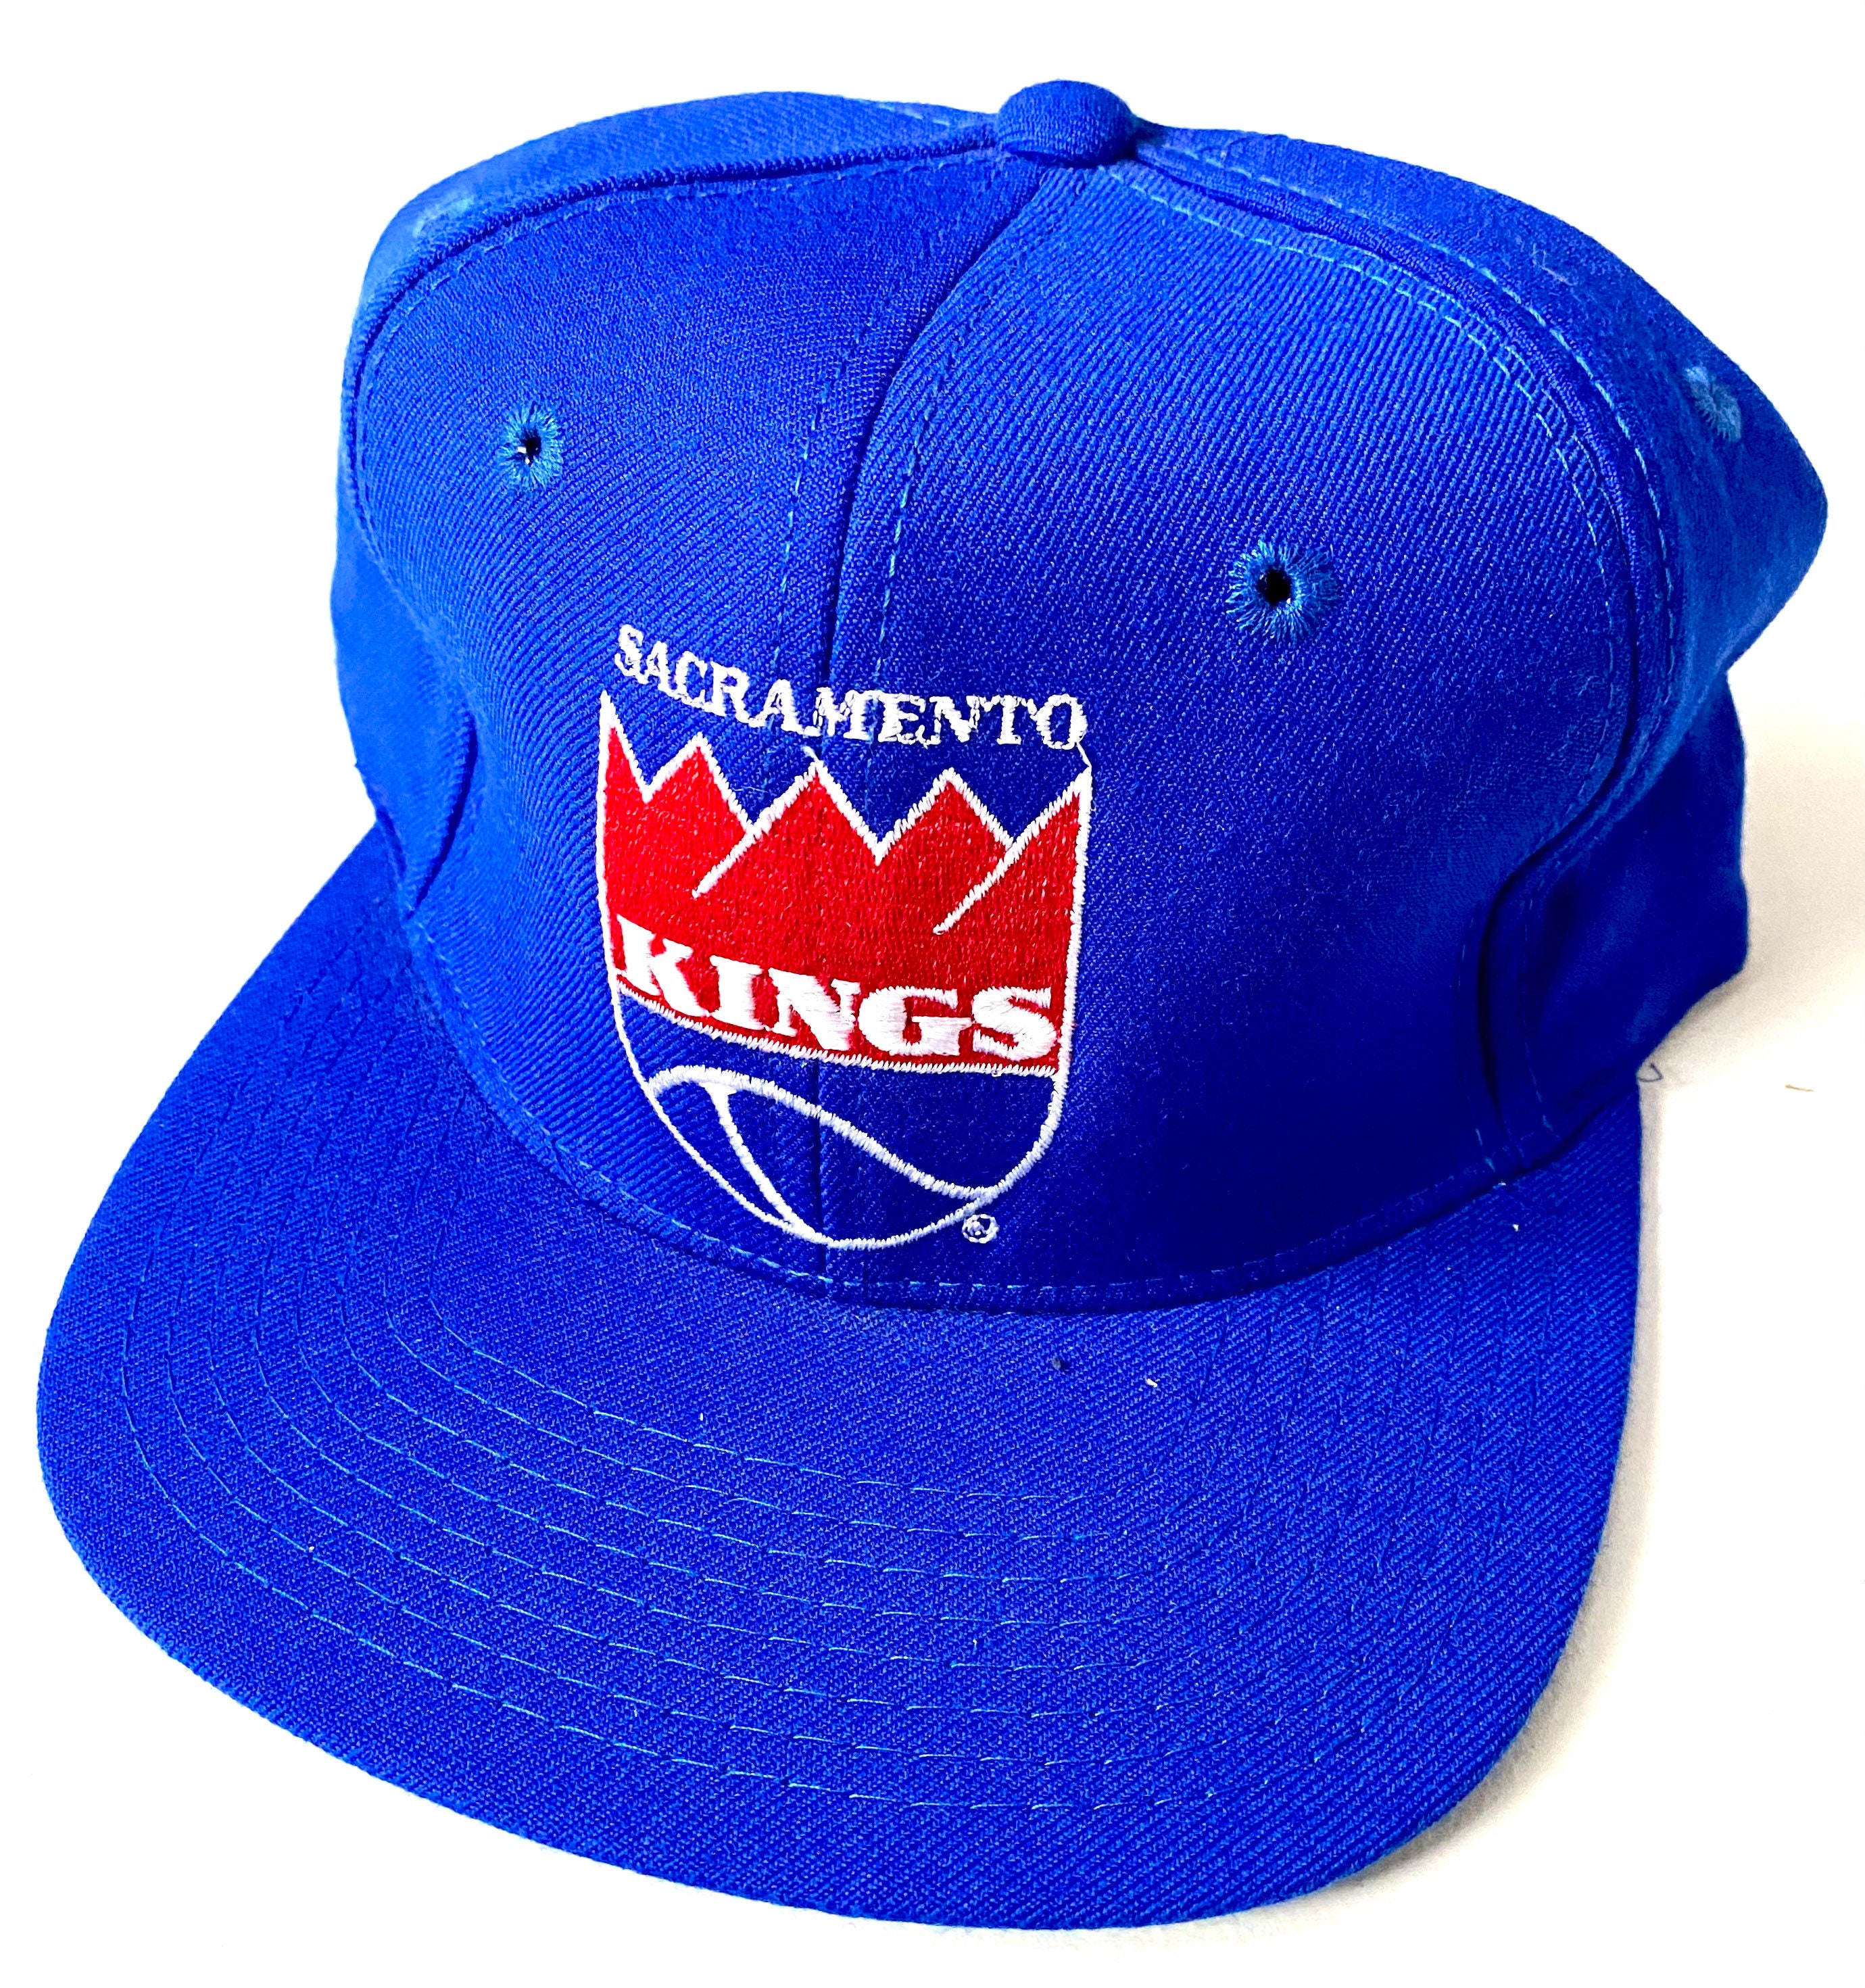 Vintage Sacramento Kings Hat 90s Sacramento Kings cap vintage sac kings hat  sac kings snapback Sacramento CA made in usa ajd hat deadstock - BIDSTITCH